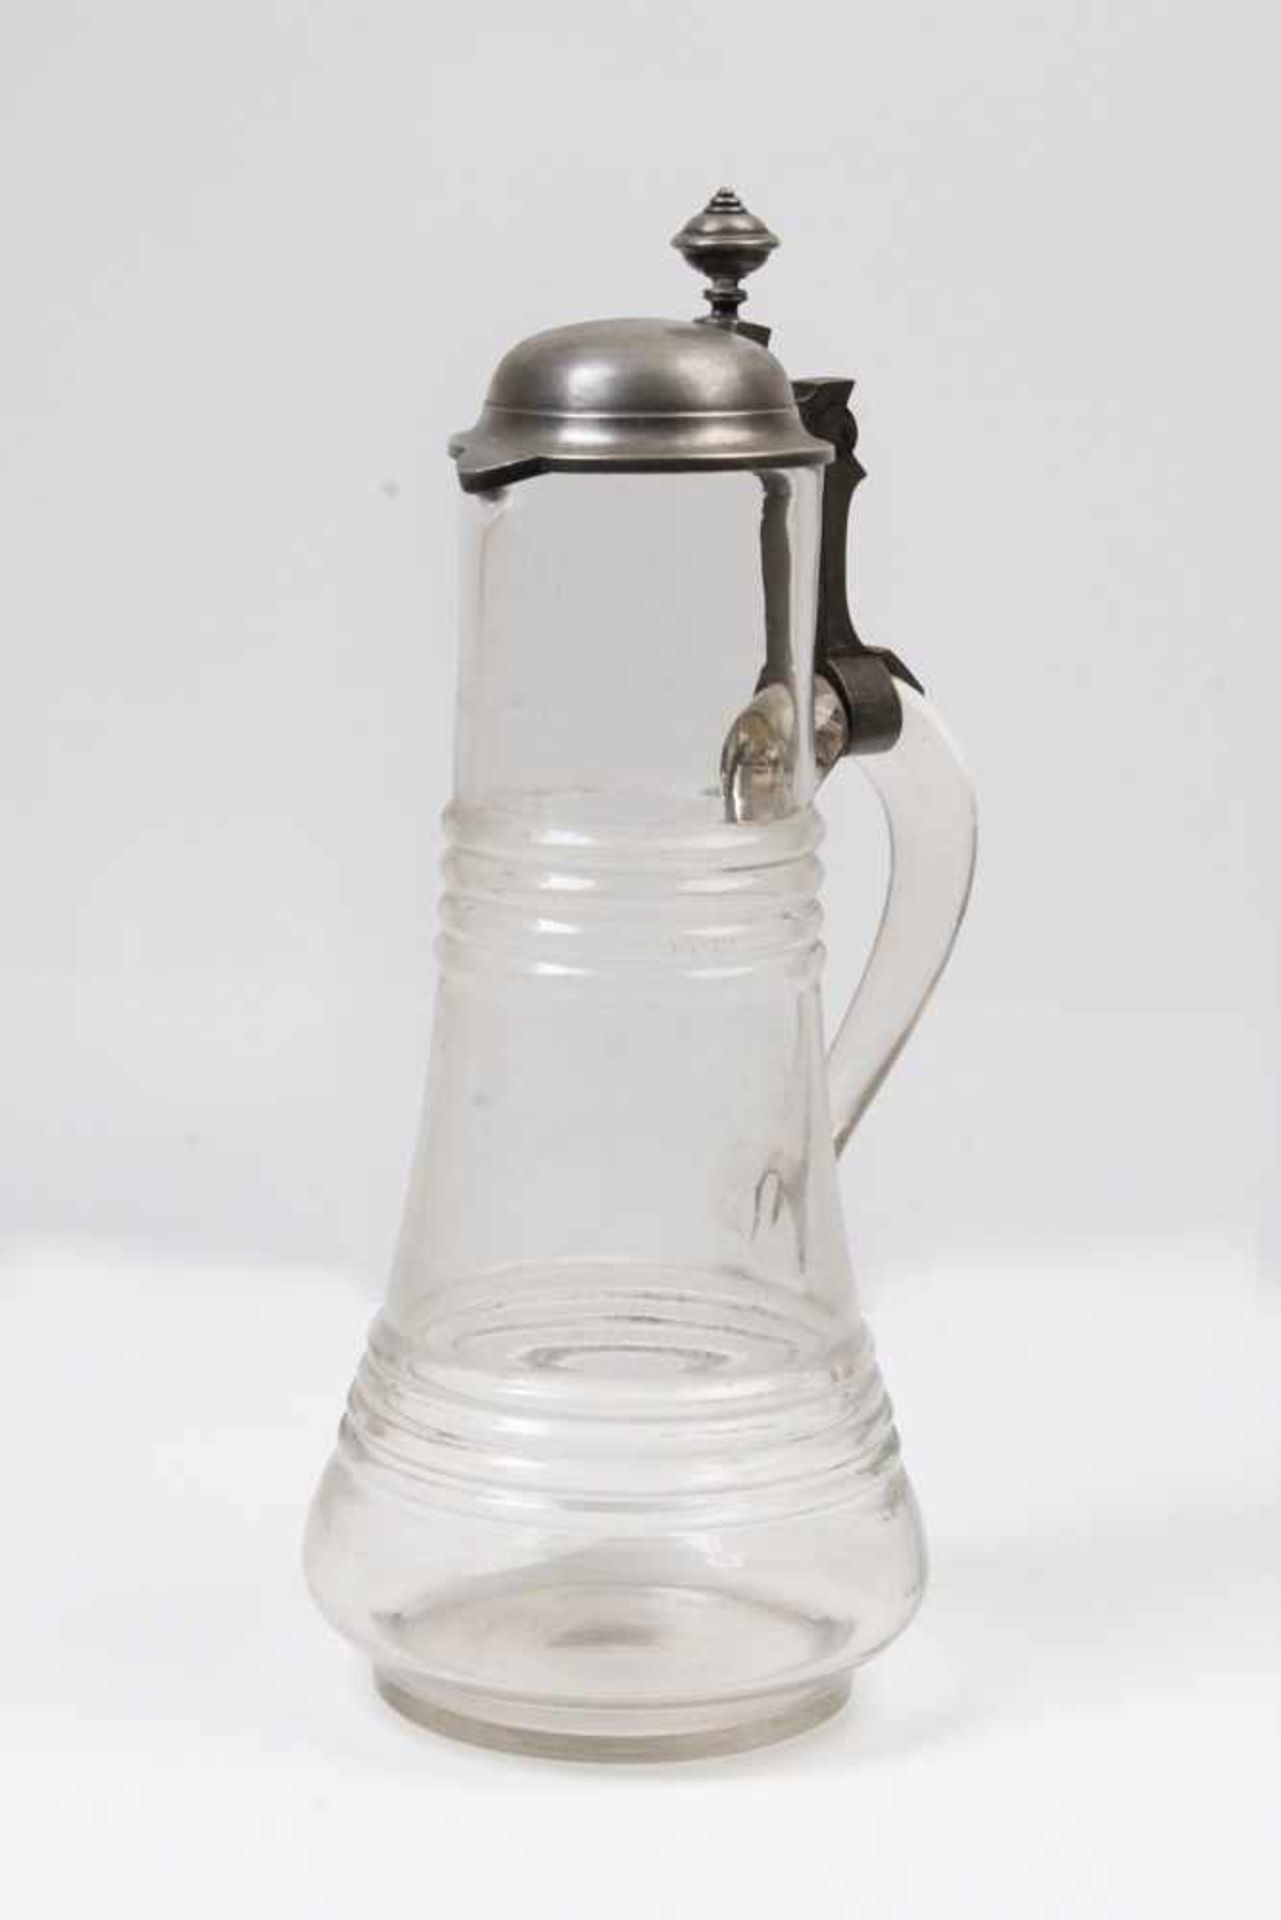 Großer Saftkrug.19. Jh. Farbloses, mundgeblasenes Glas. Zinndeckel. H: 35 cm.